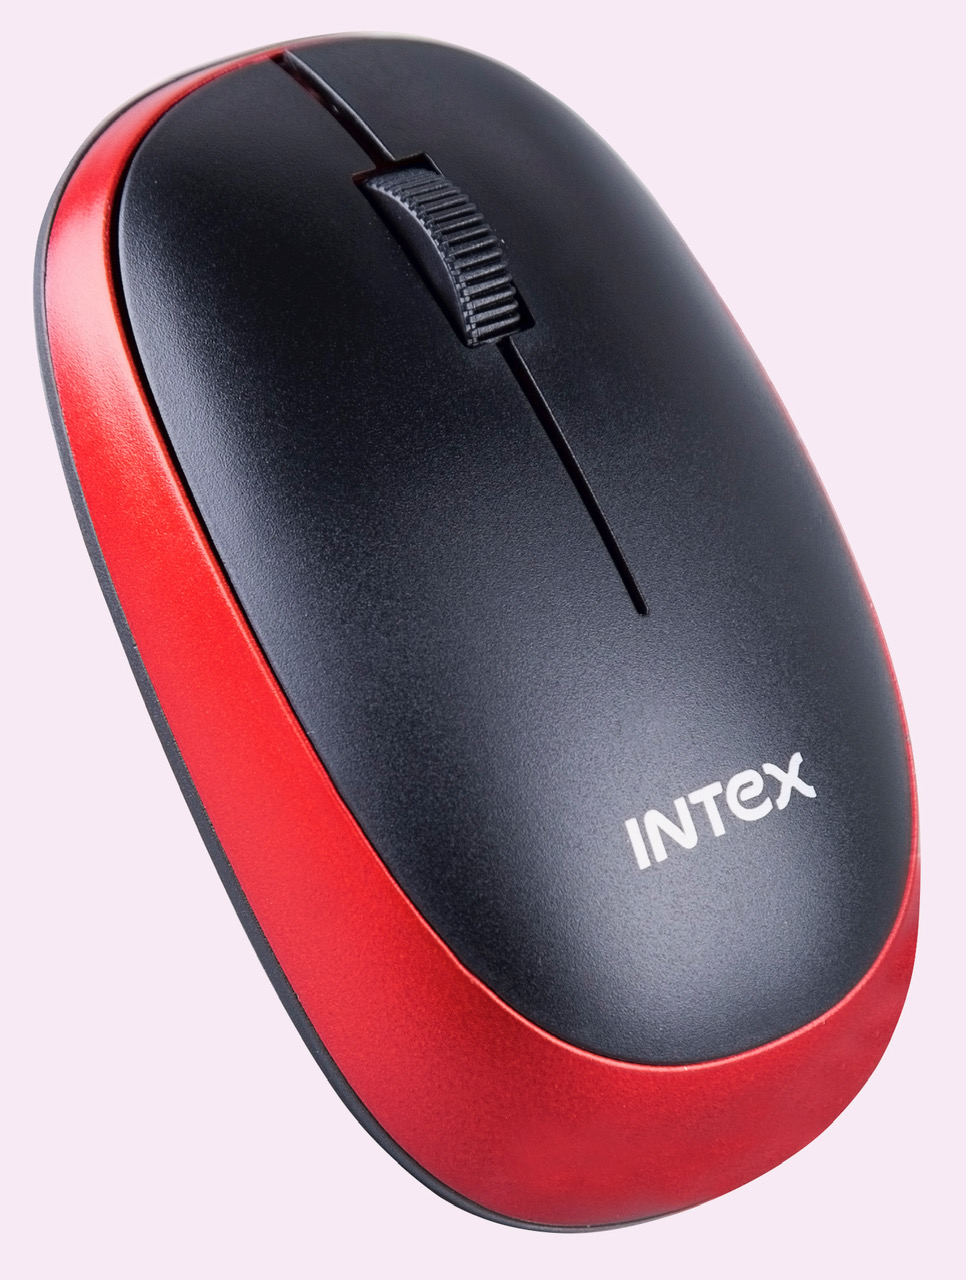 Intex Wireless Mouse